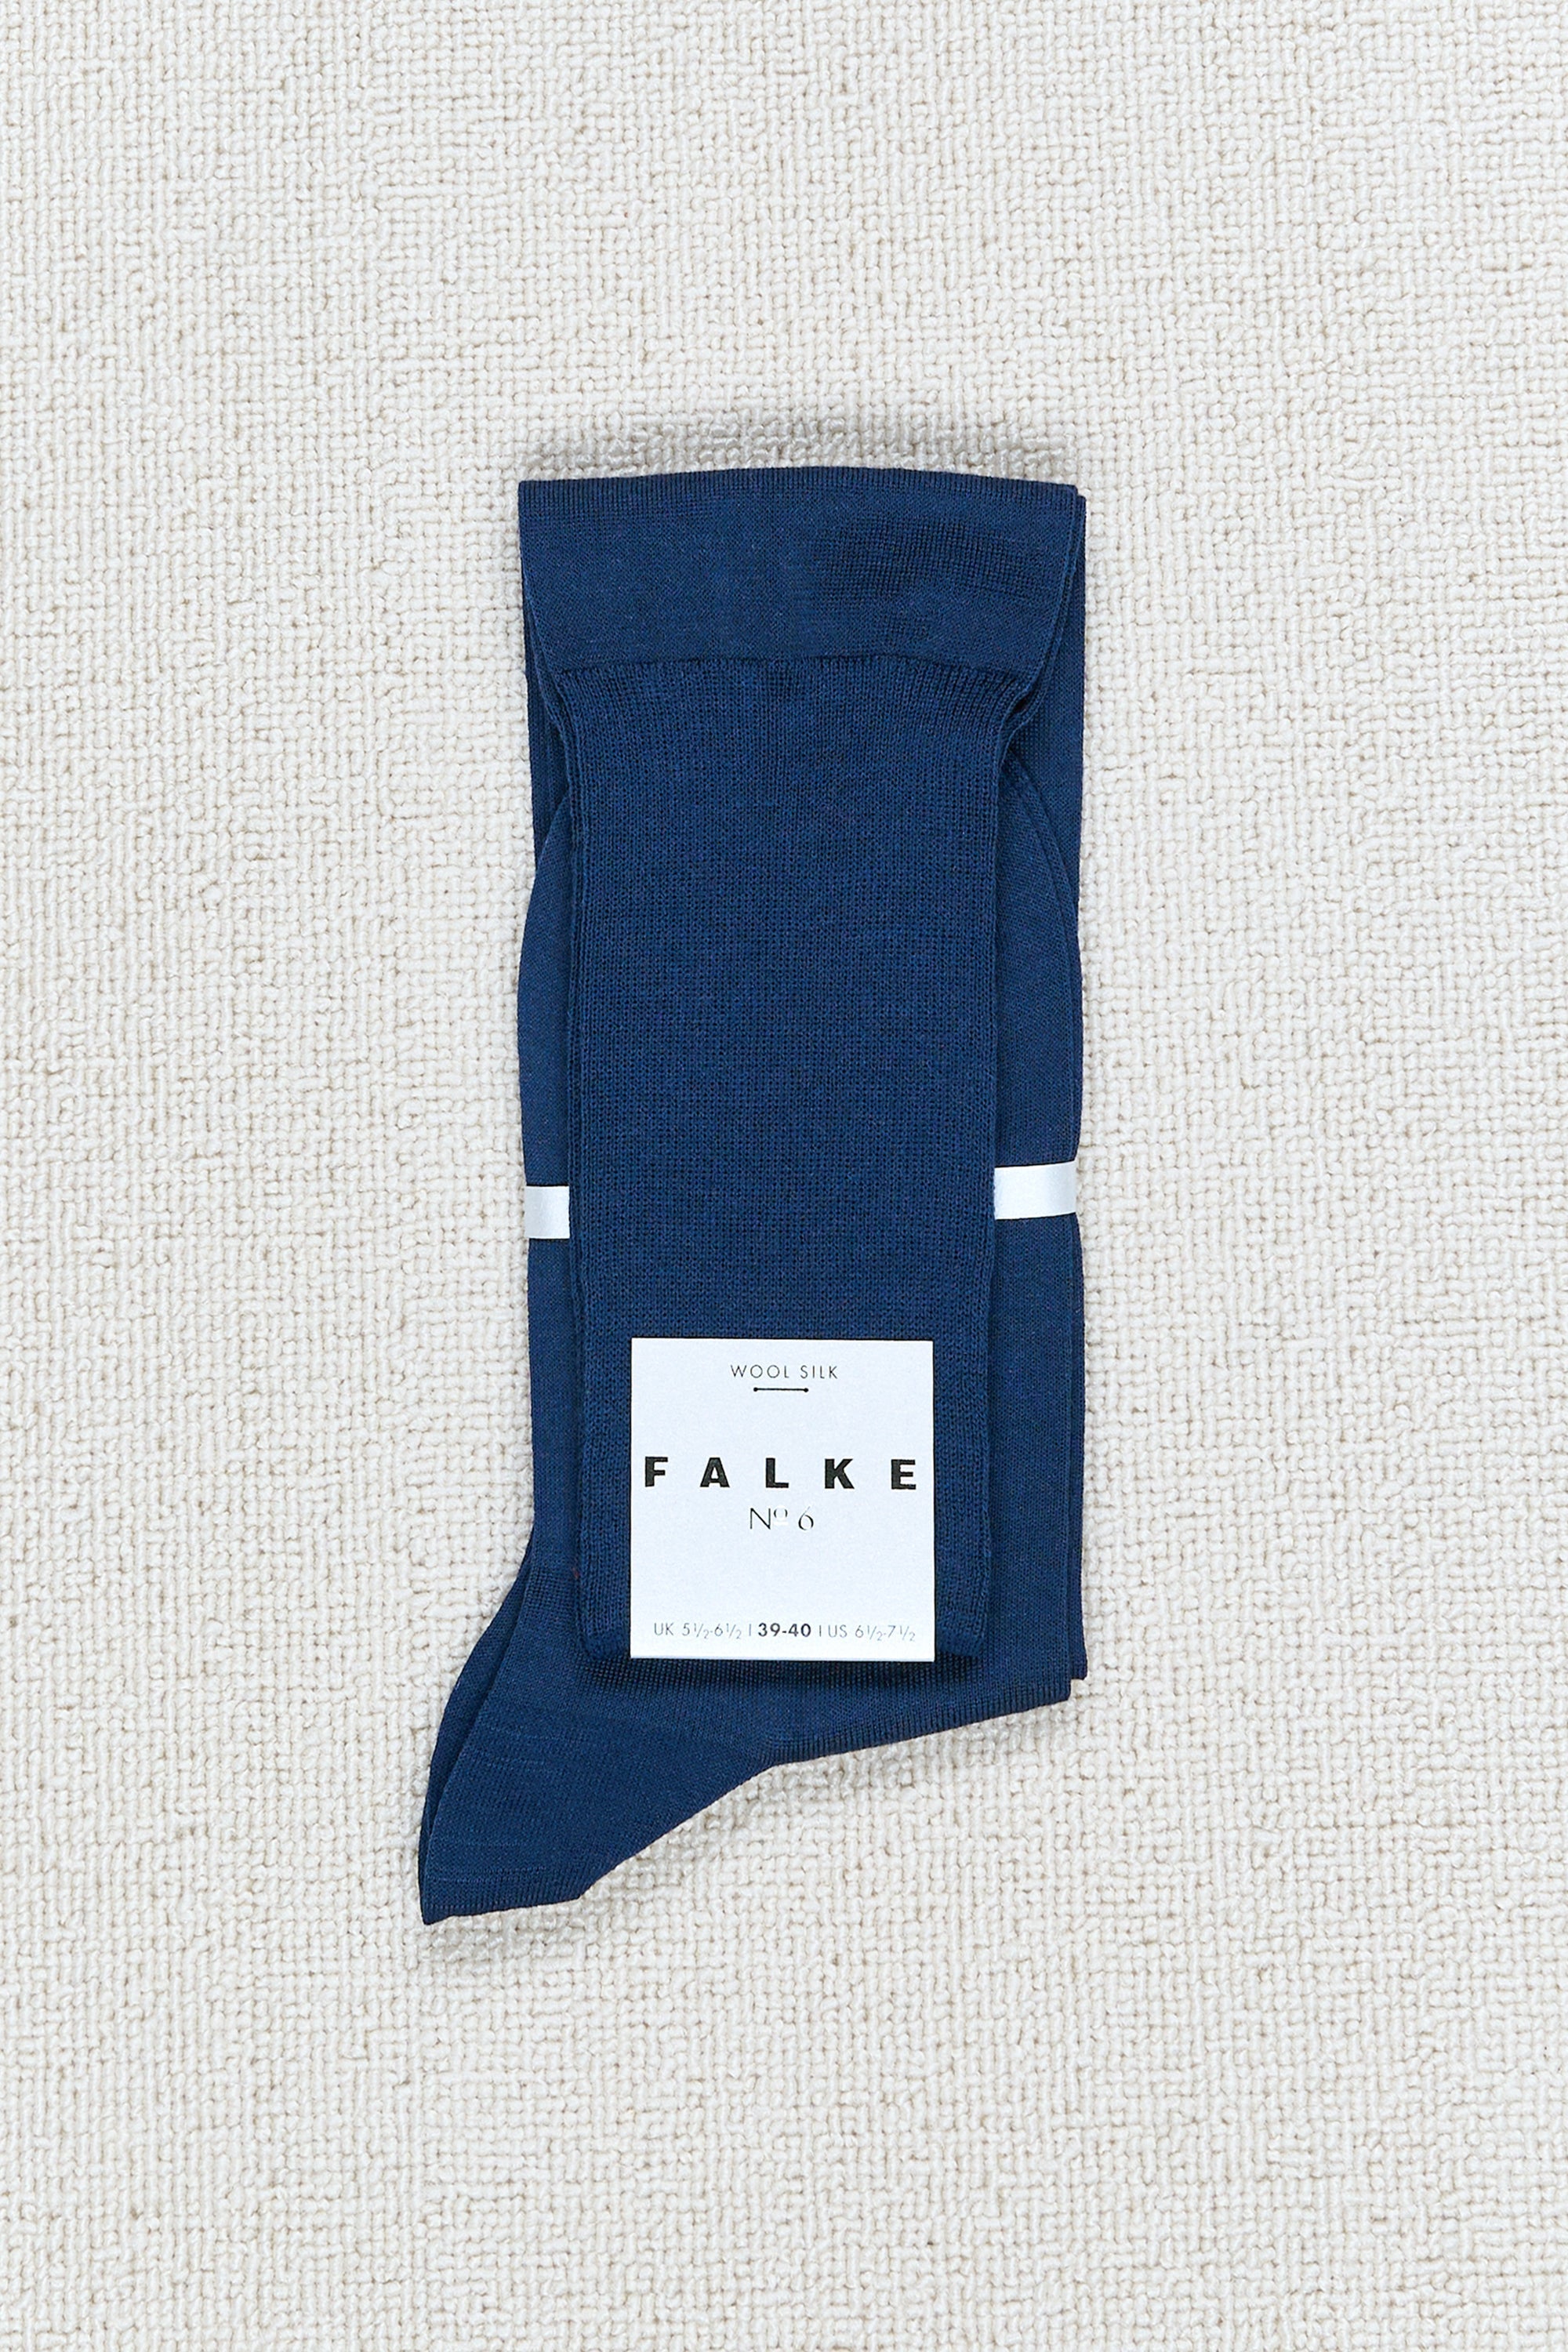 Falke 15451 Royal Blue Merino Wool/Silk Plain Long Socks